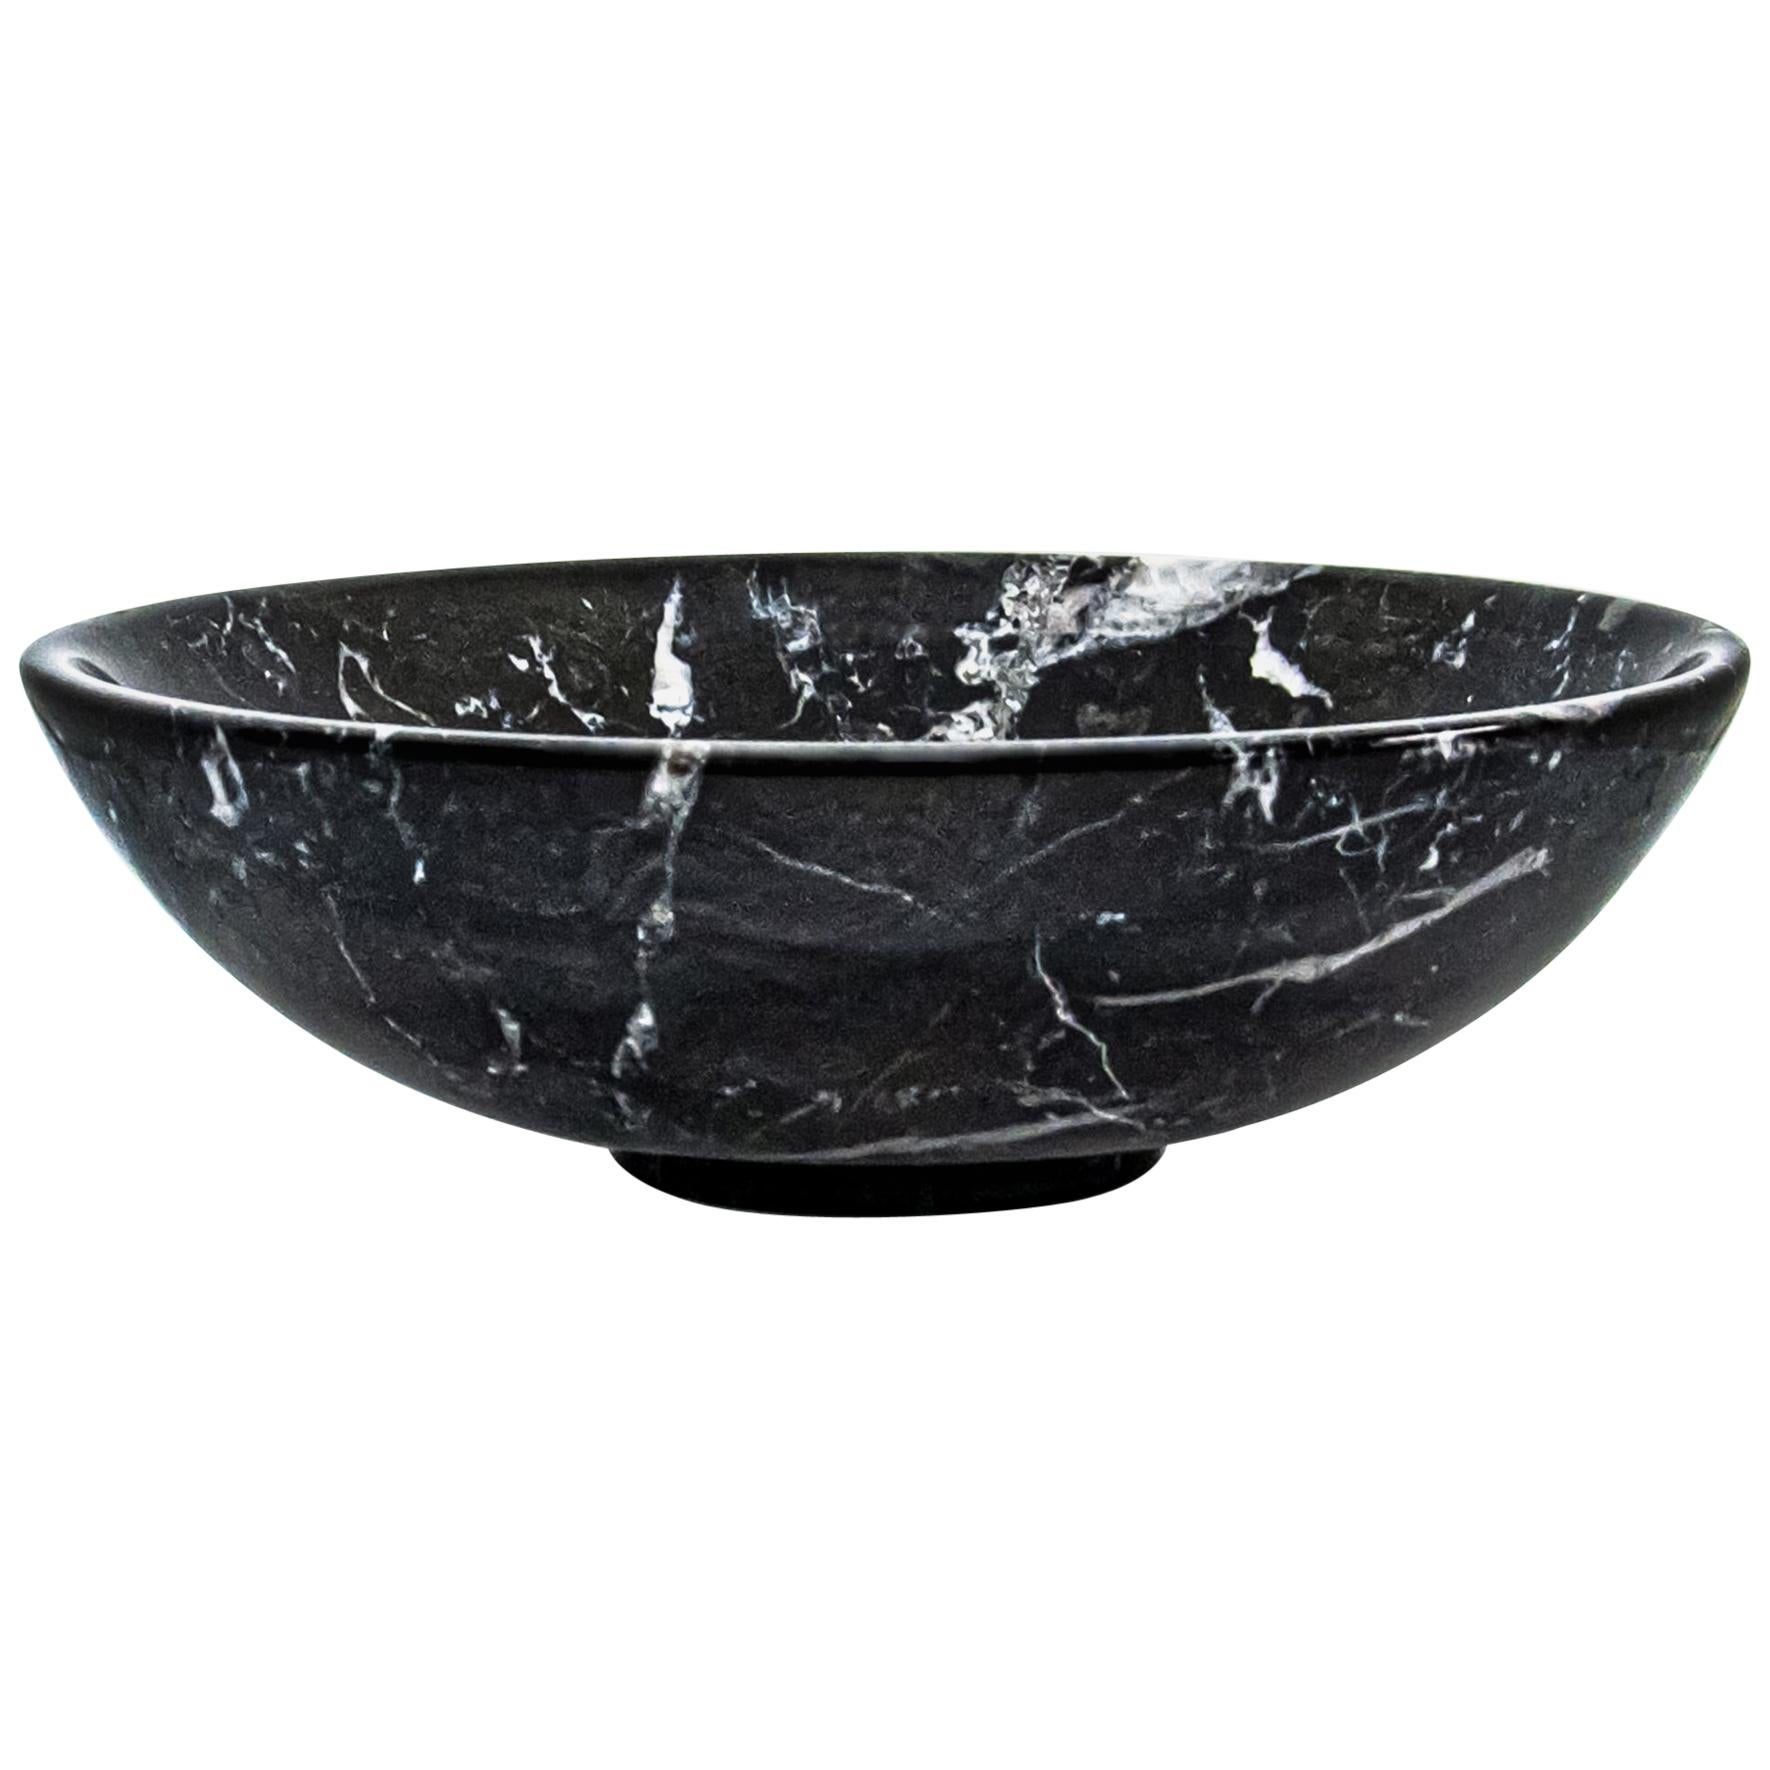 Bowl in Black Marble